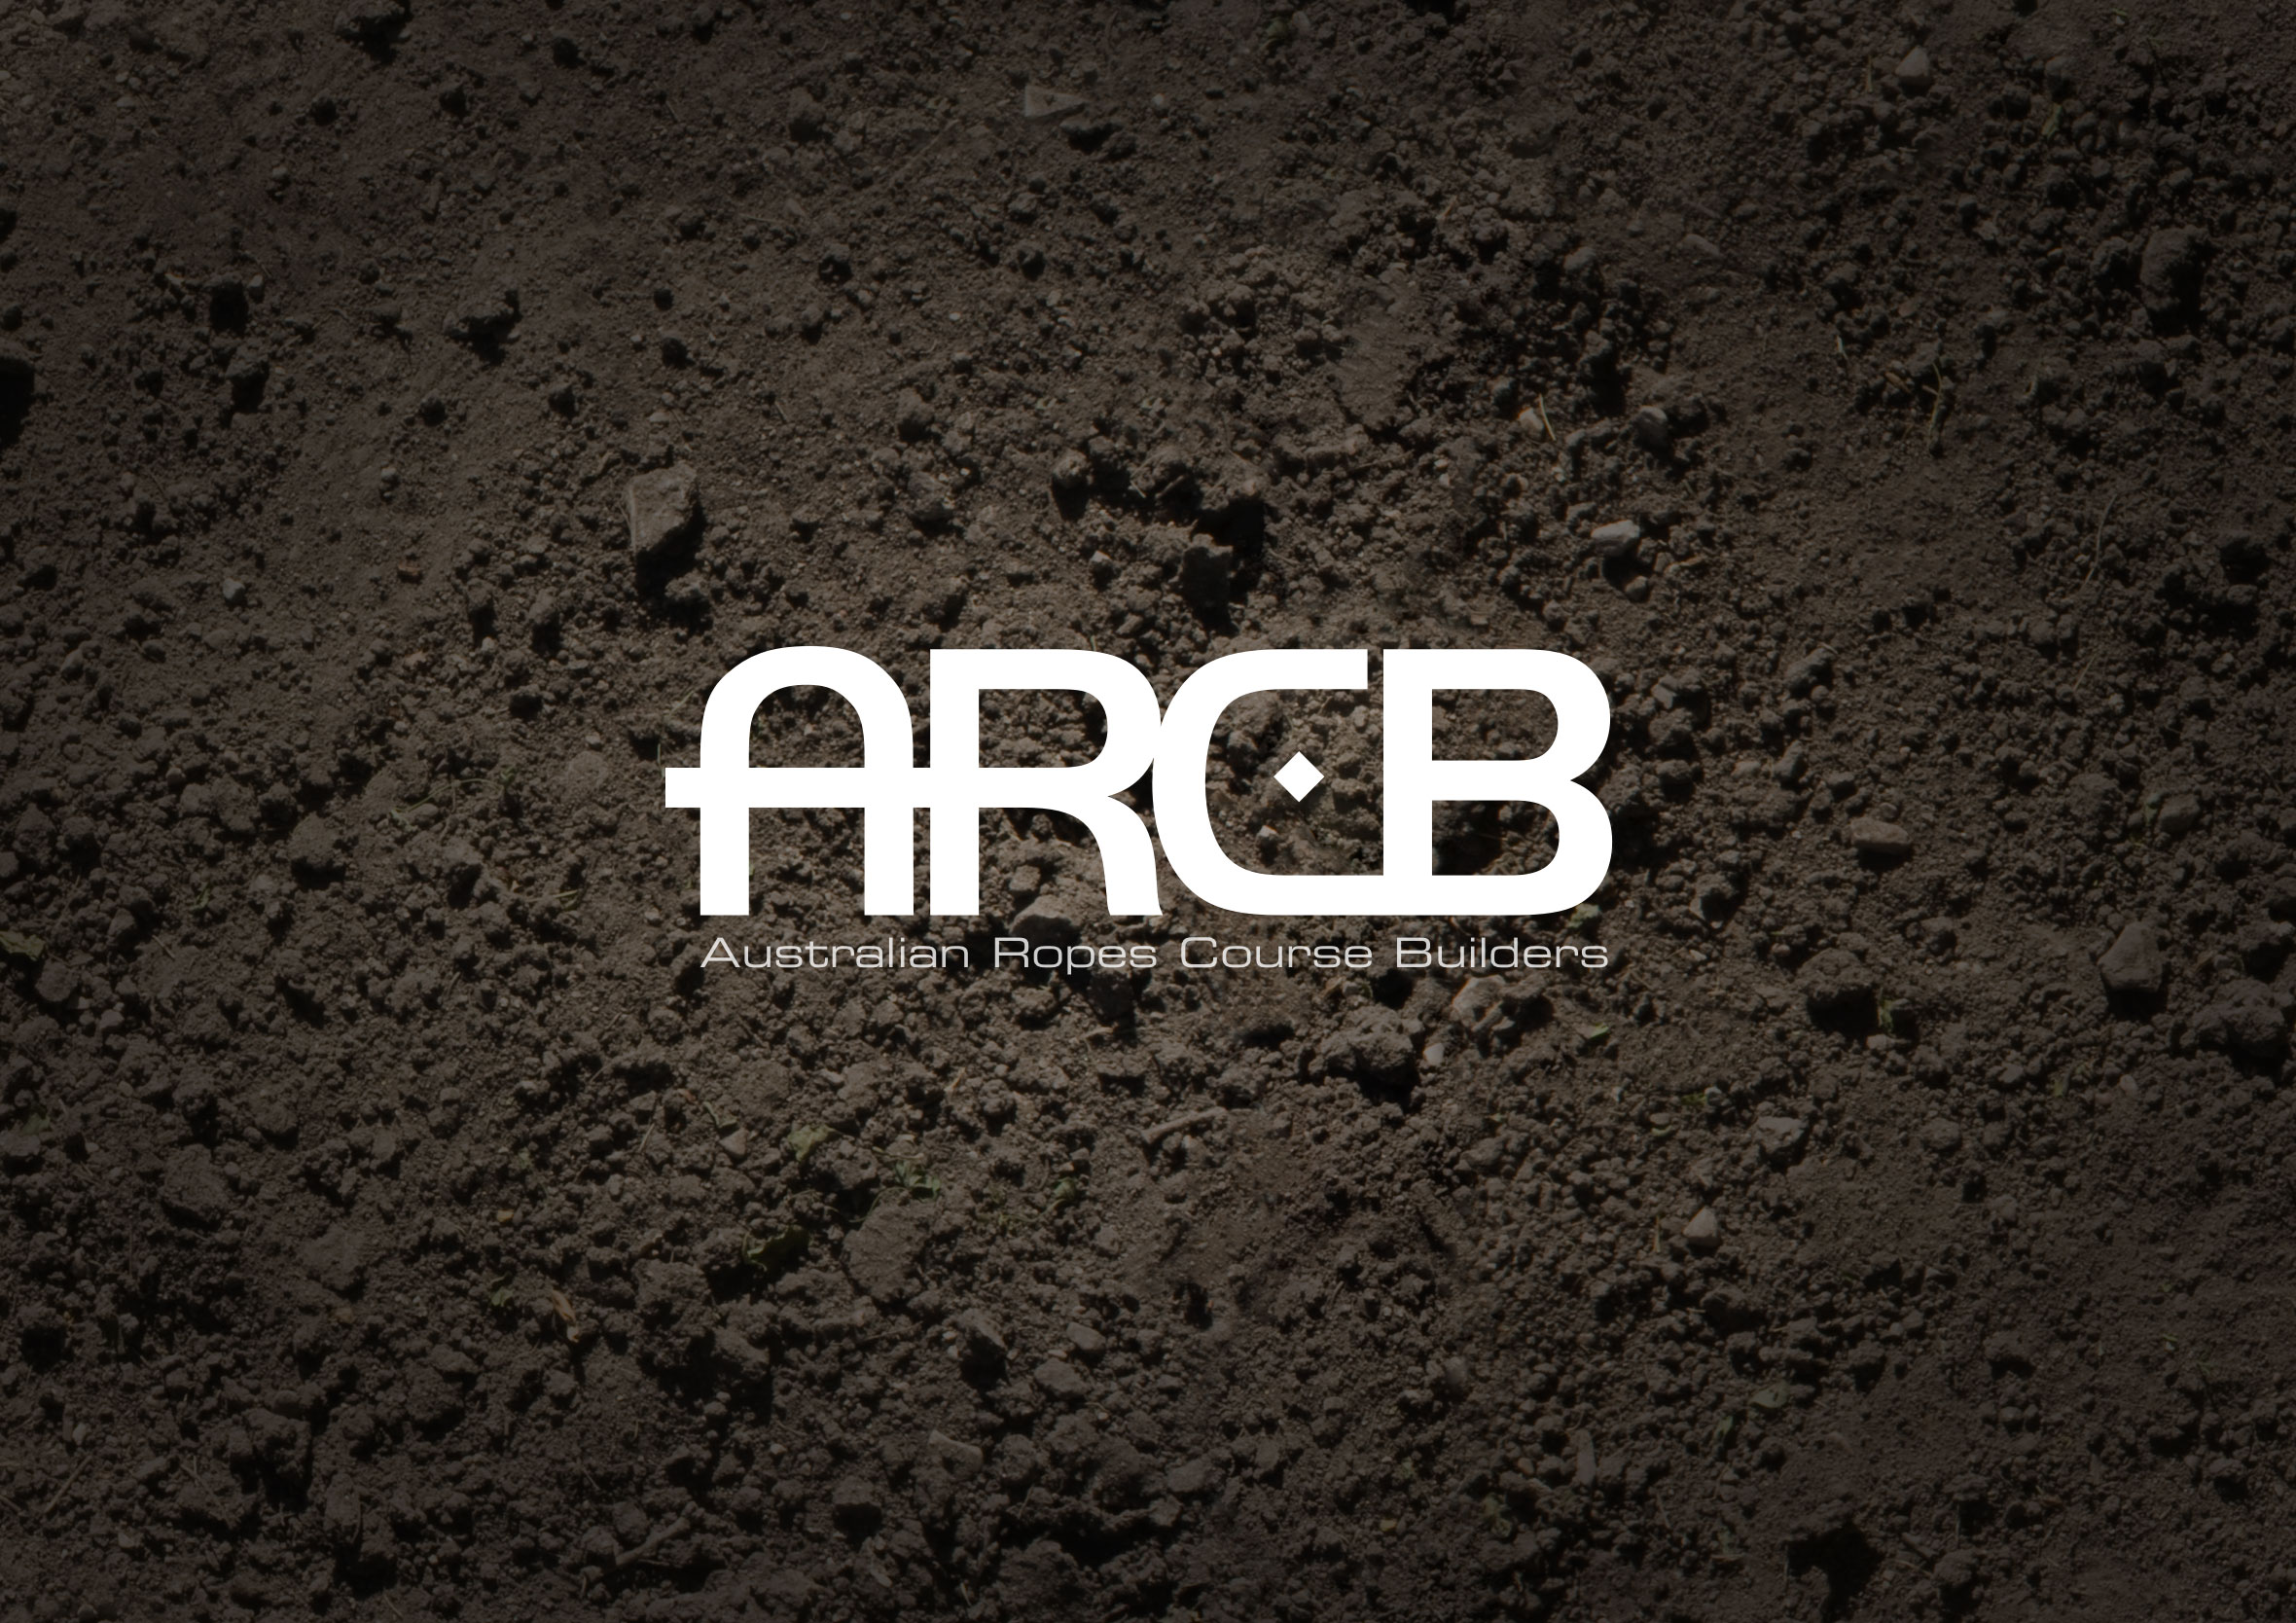 Australian Ropes Course Builders (ARCB) logo - dark version